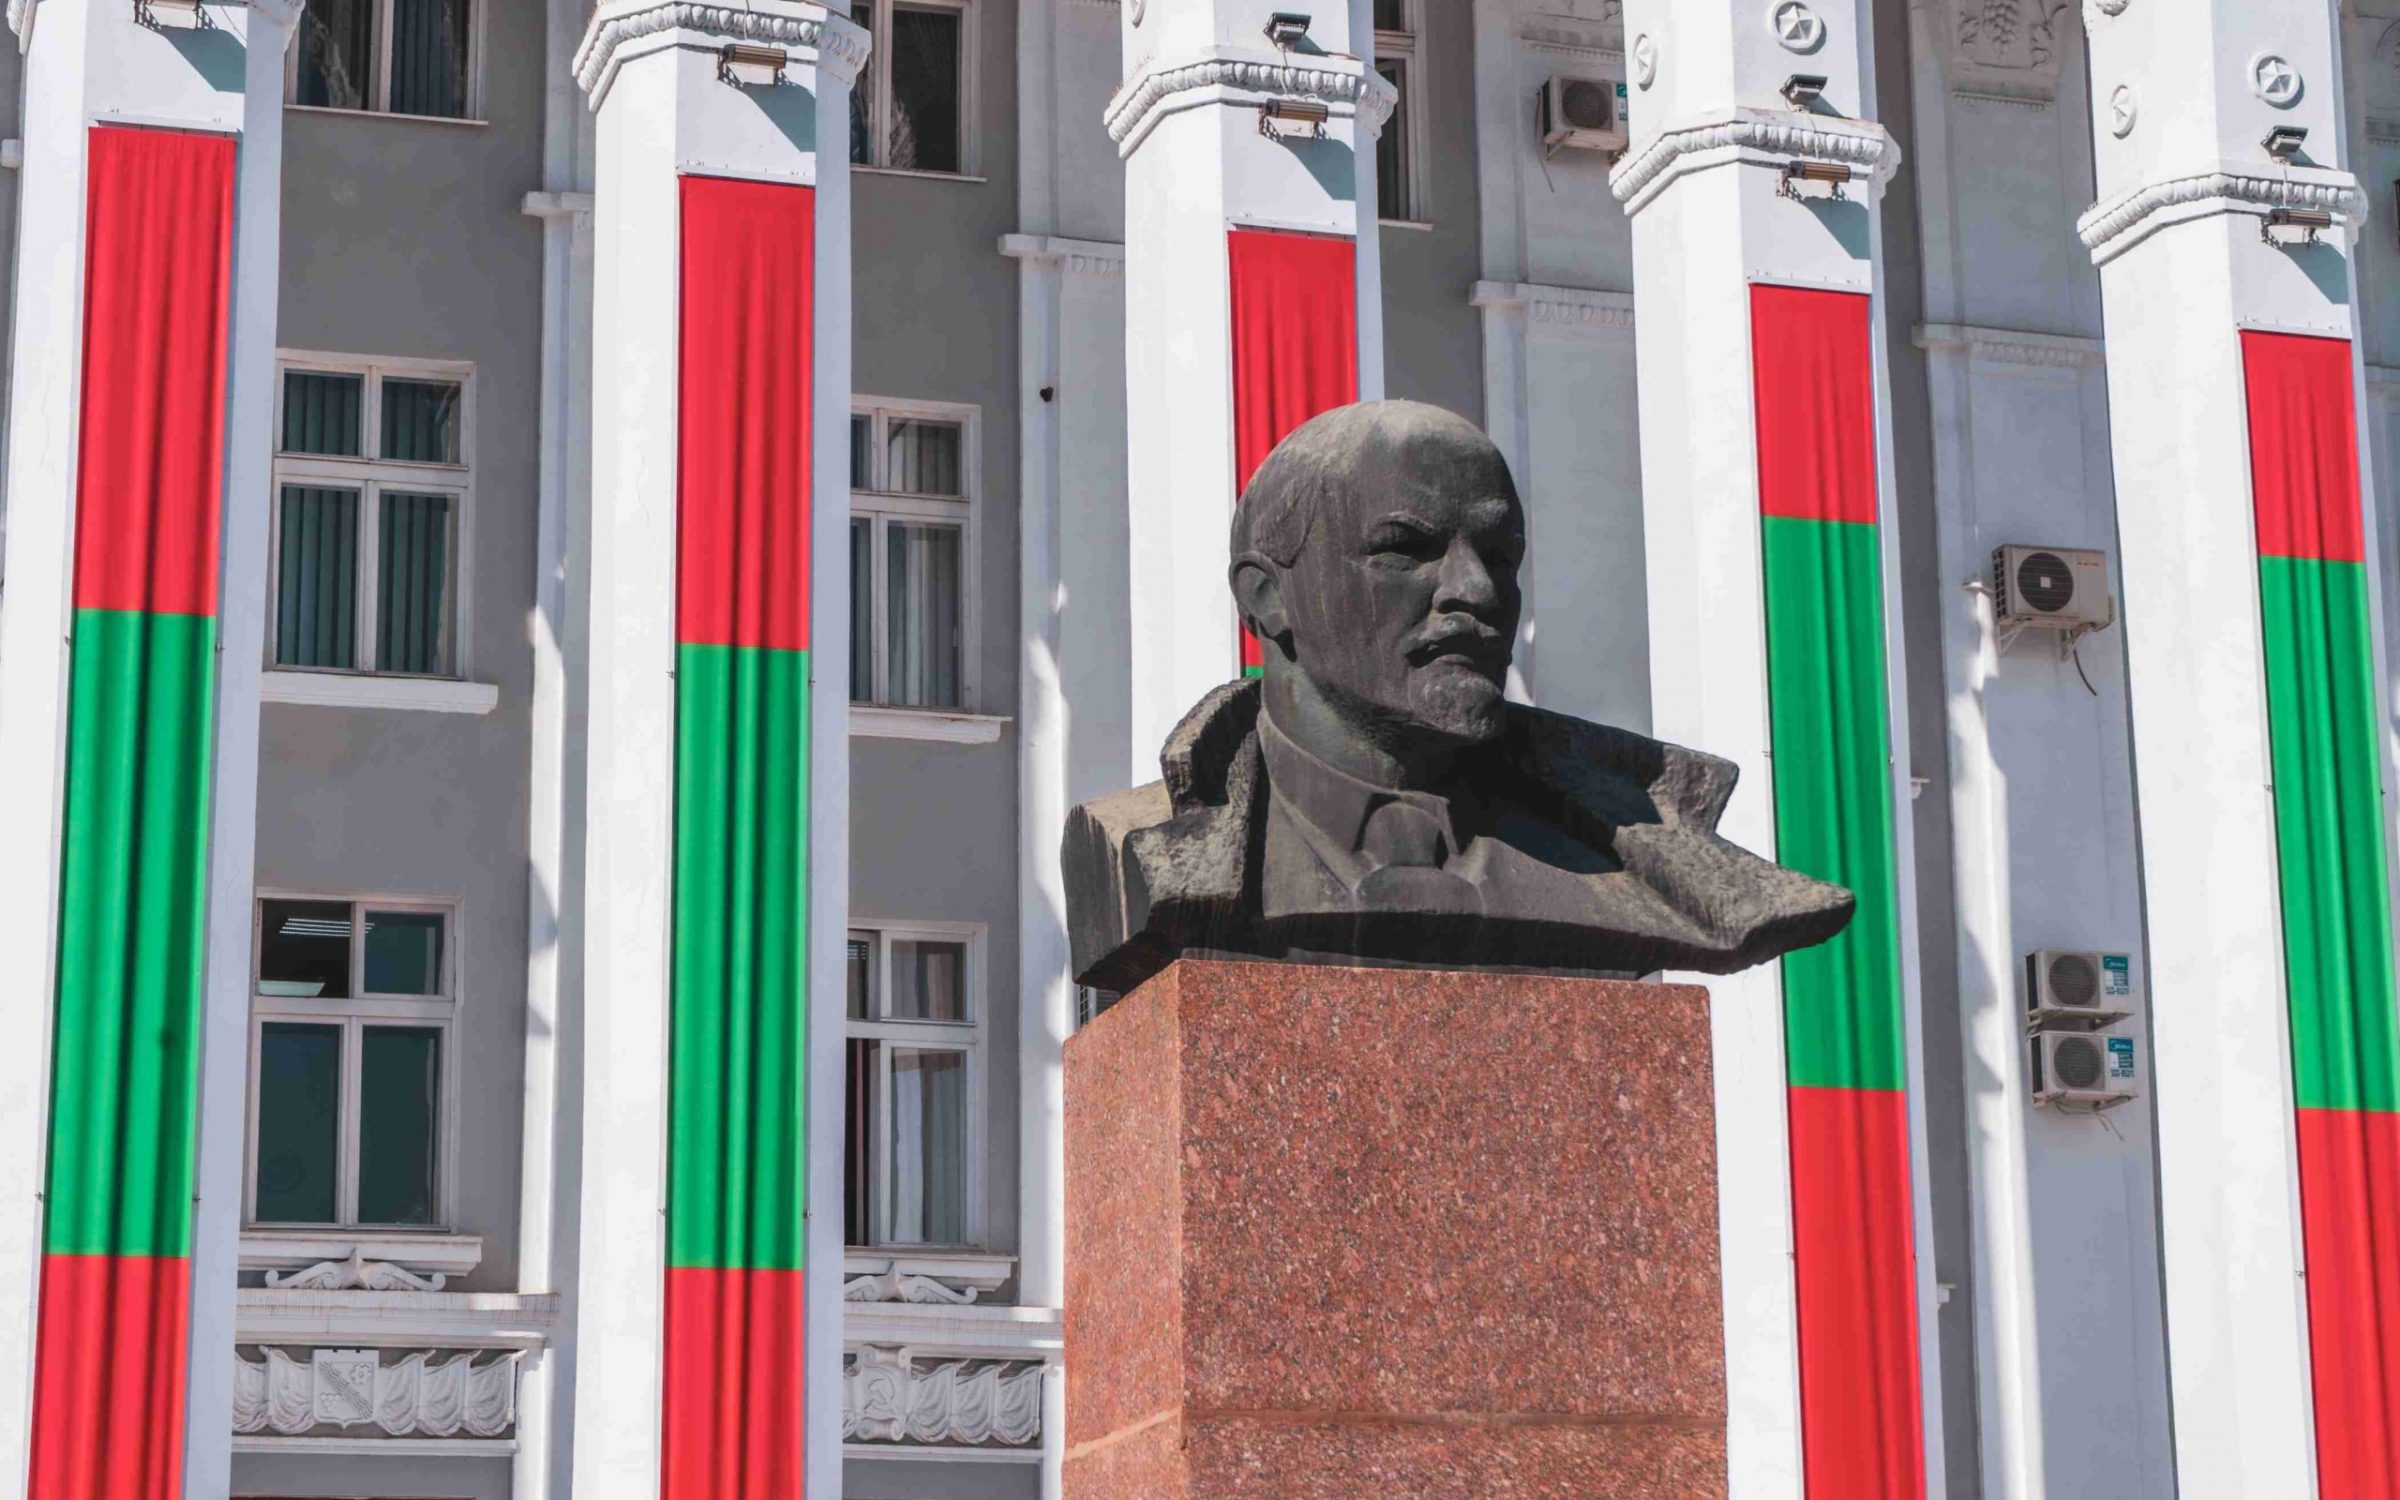 Statue of Vladimir Lenin in Tiraspol. Transnistria